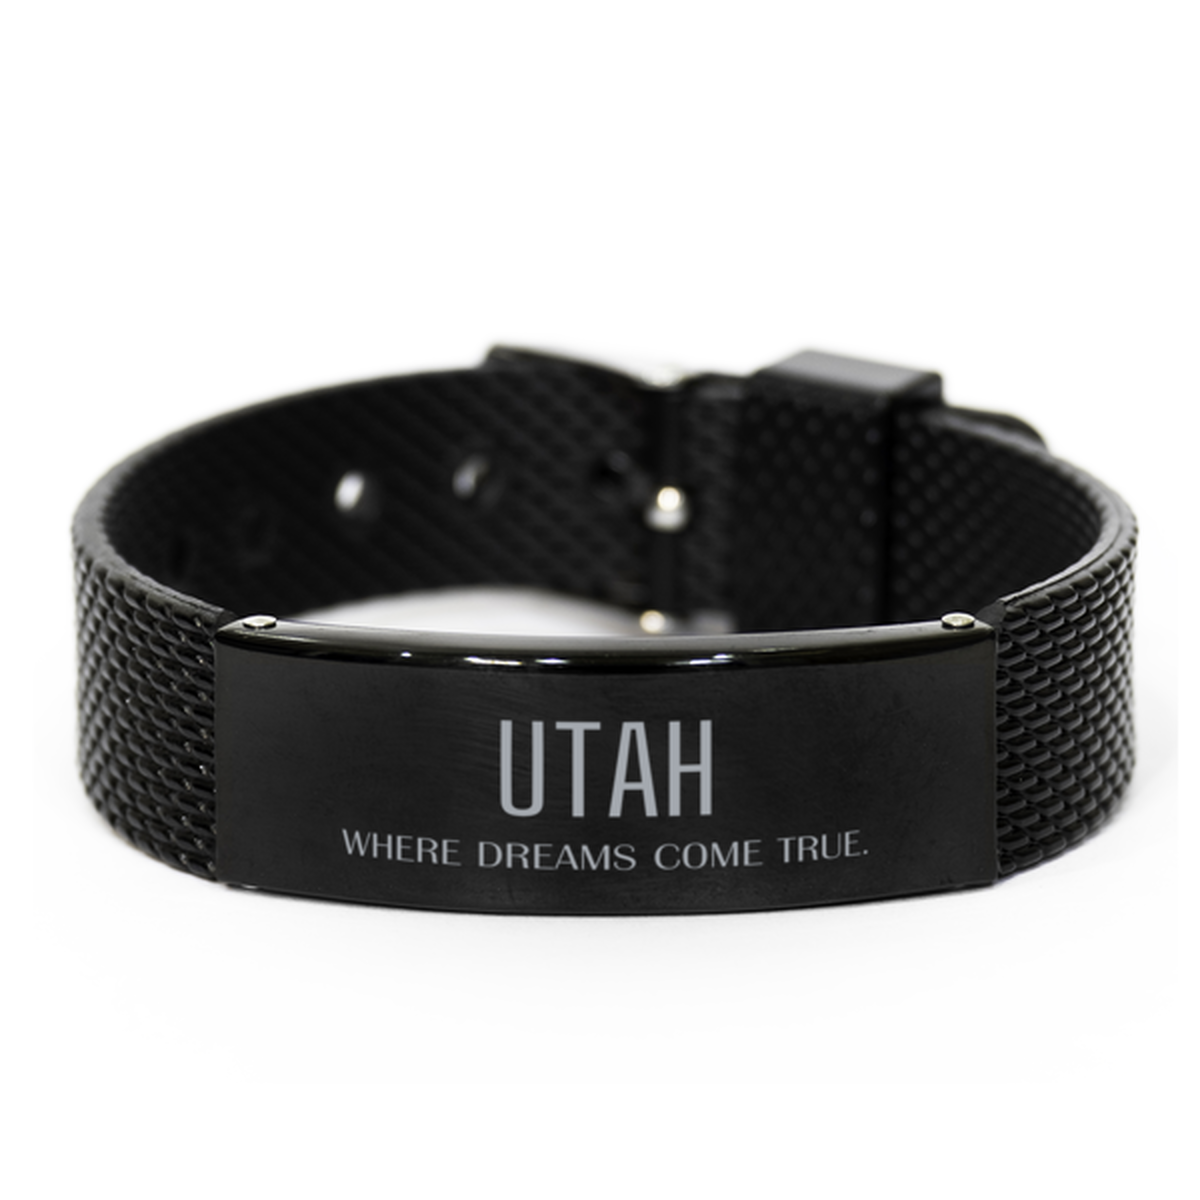 Love Utah State Black Shark Mesh Bracelet, Utah Where dreams come true, Birthday Inspirational Gifts For Utah Men, Women, Friends